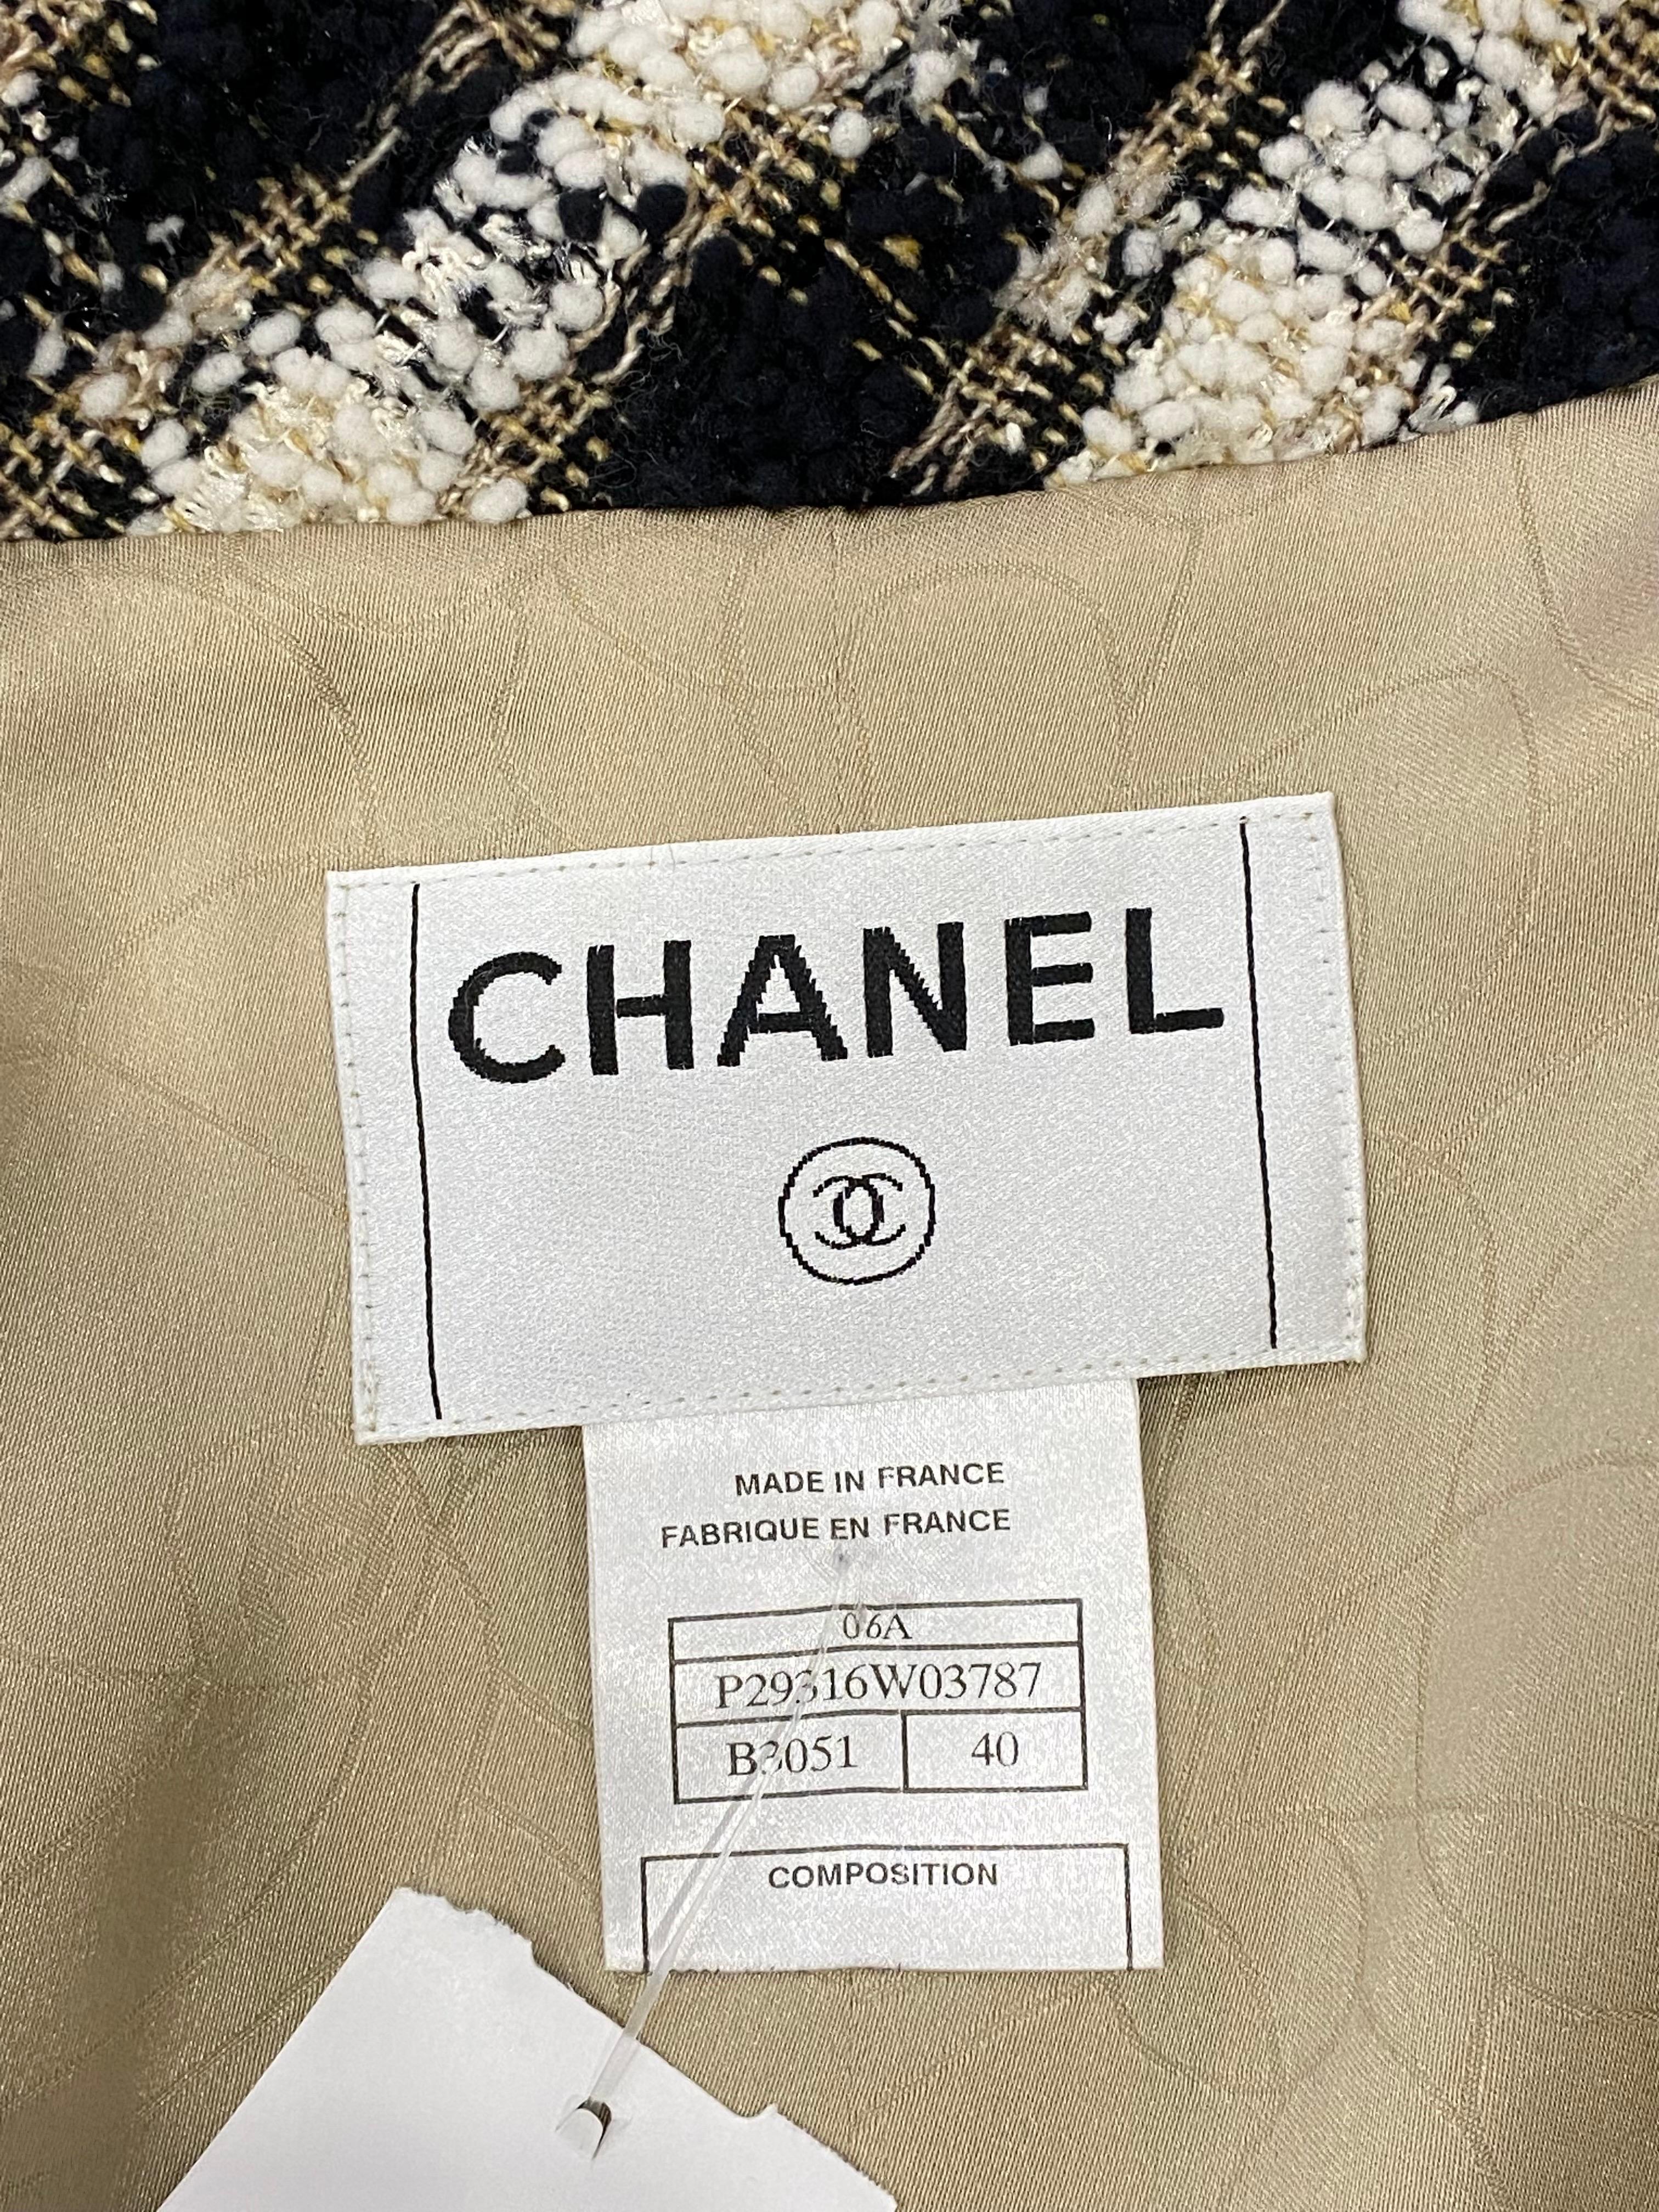 Chanel Tan Black and Ivory Plaid Wool Blend Jacket - Sz 40 - 2006A 4